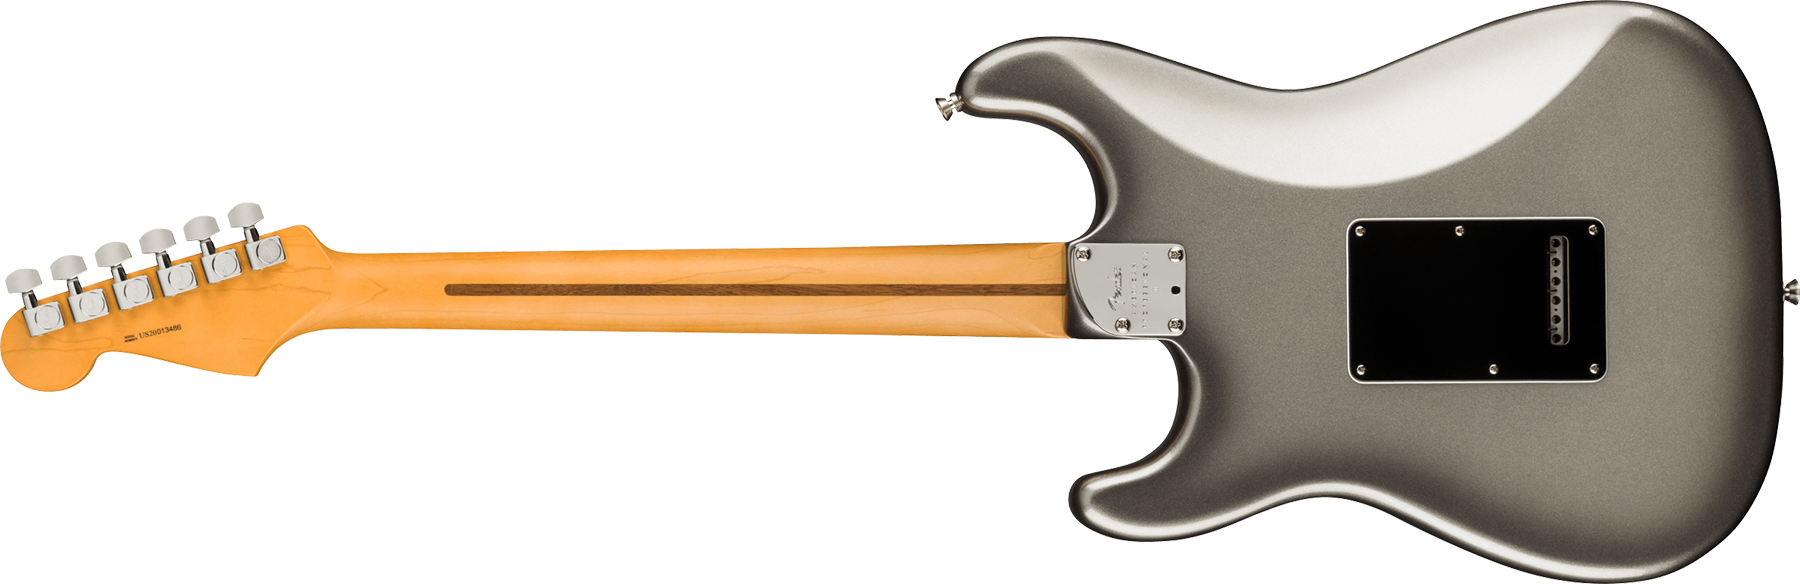 Fender Strat American Professional Ii Usa Rw - Mercury - Str shape electric guitar - Variation 1